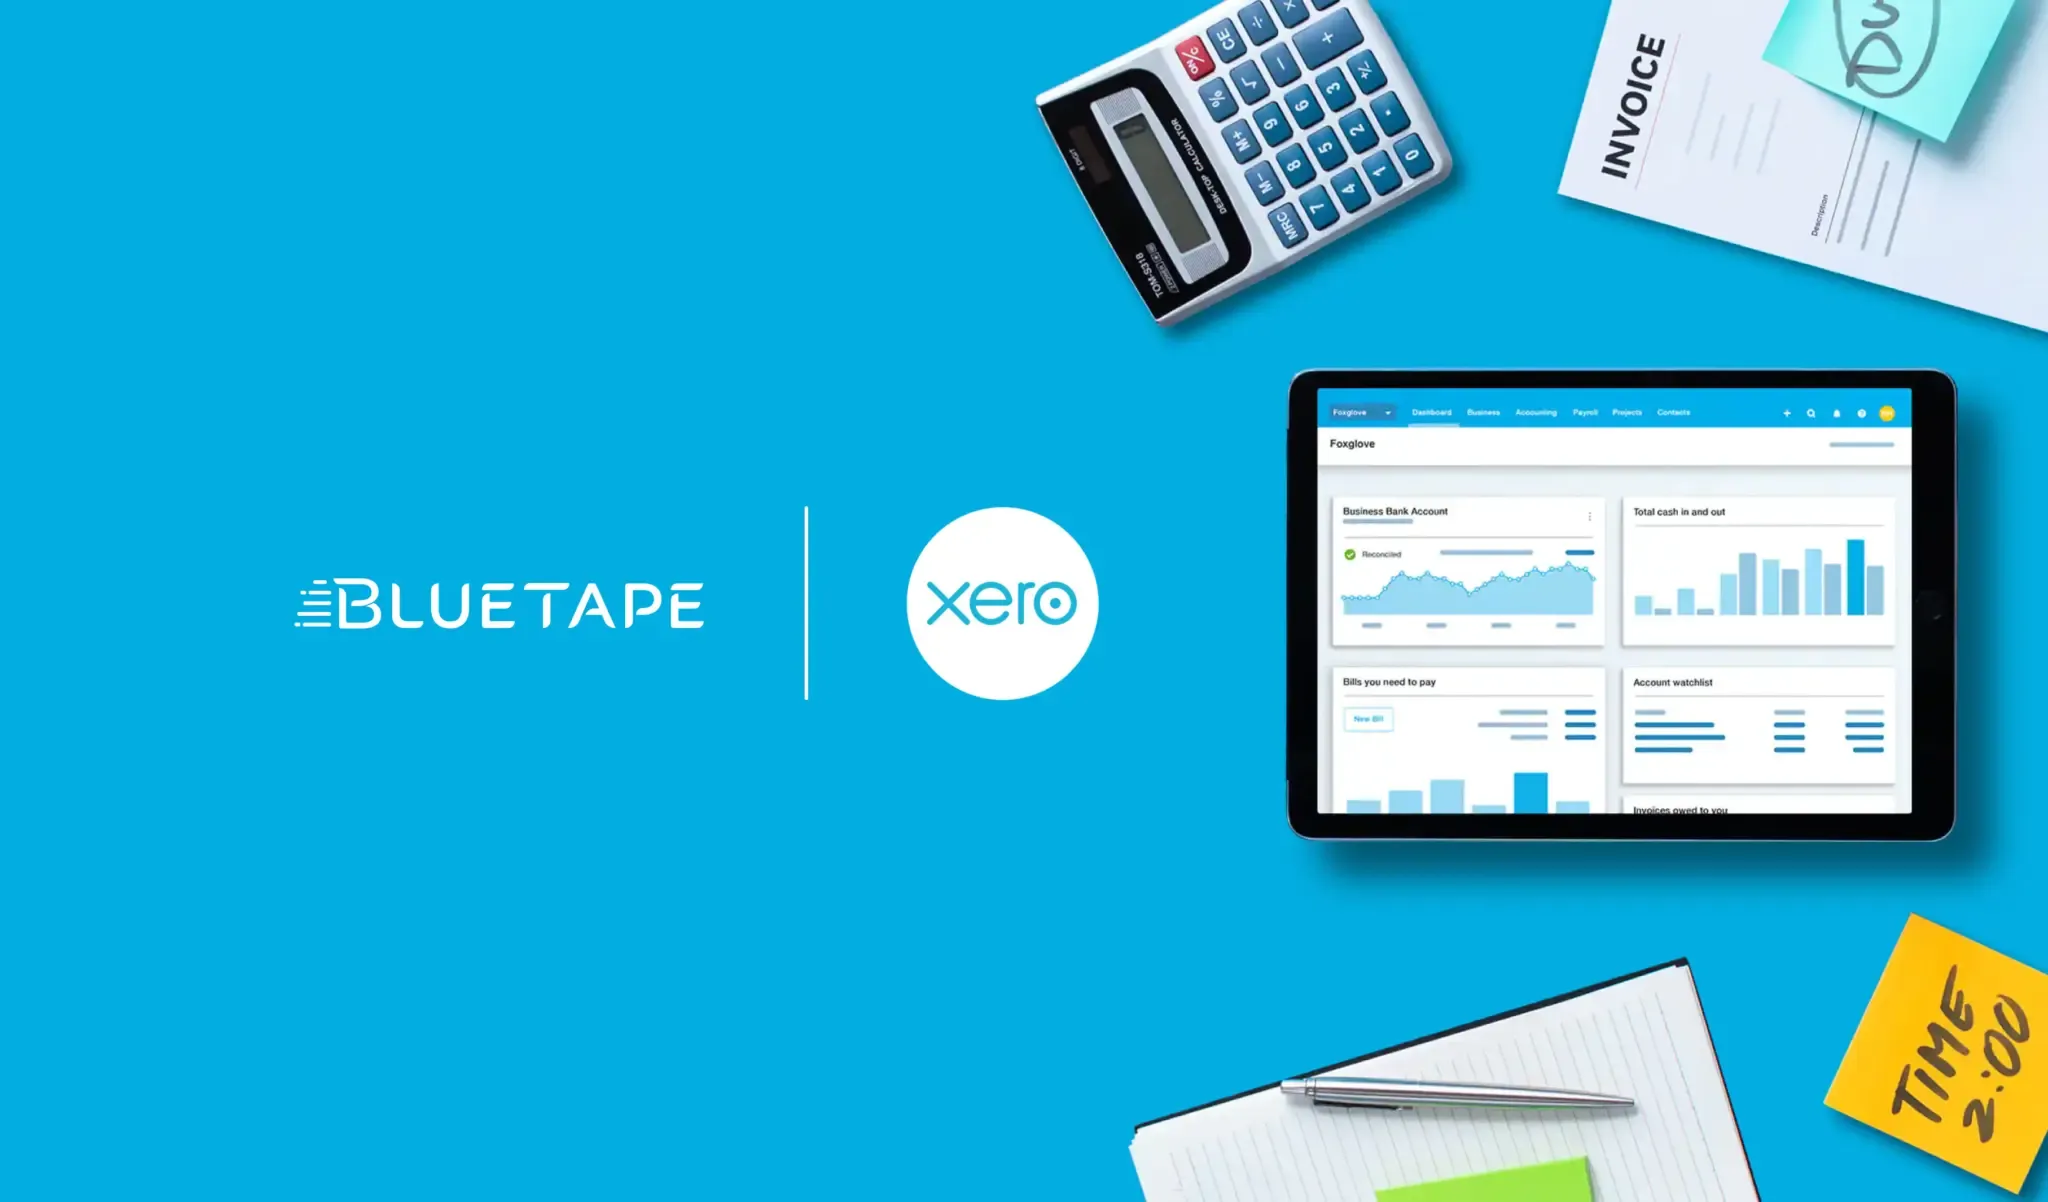 BlueTape integrates with Xero